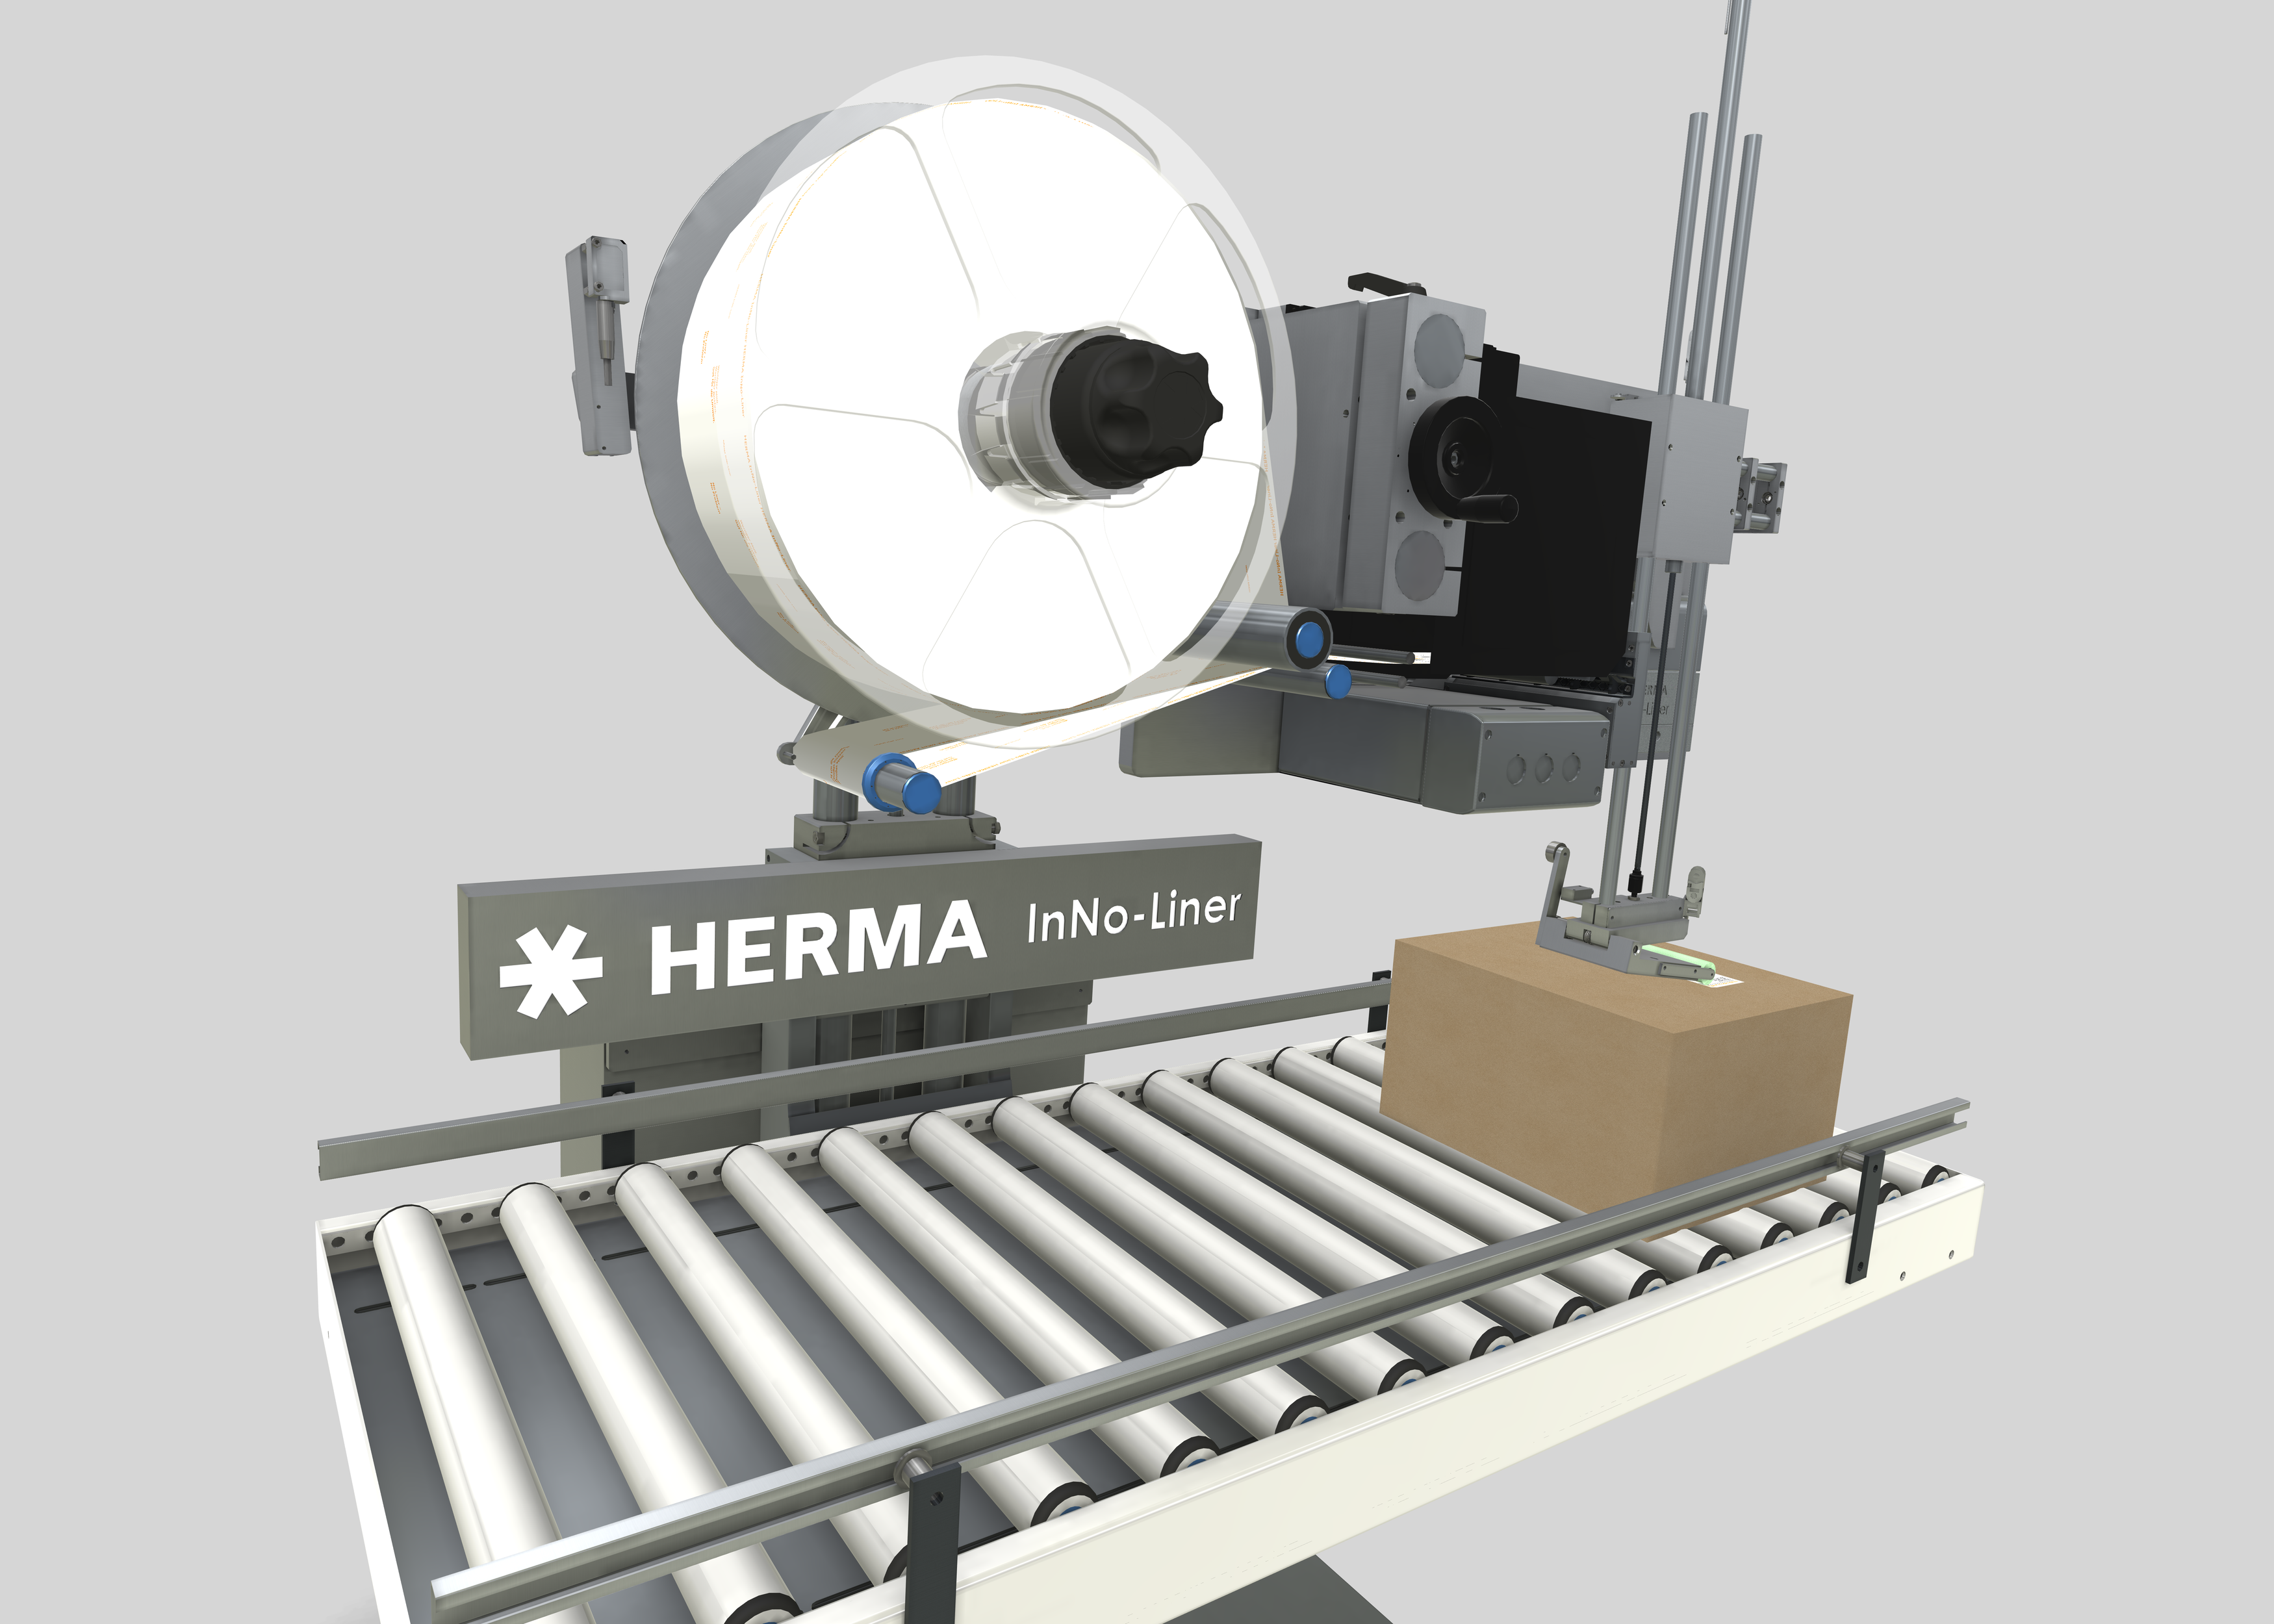 HERMA InNo Liner label applicator